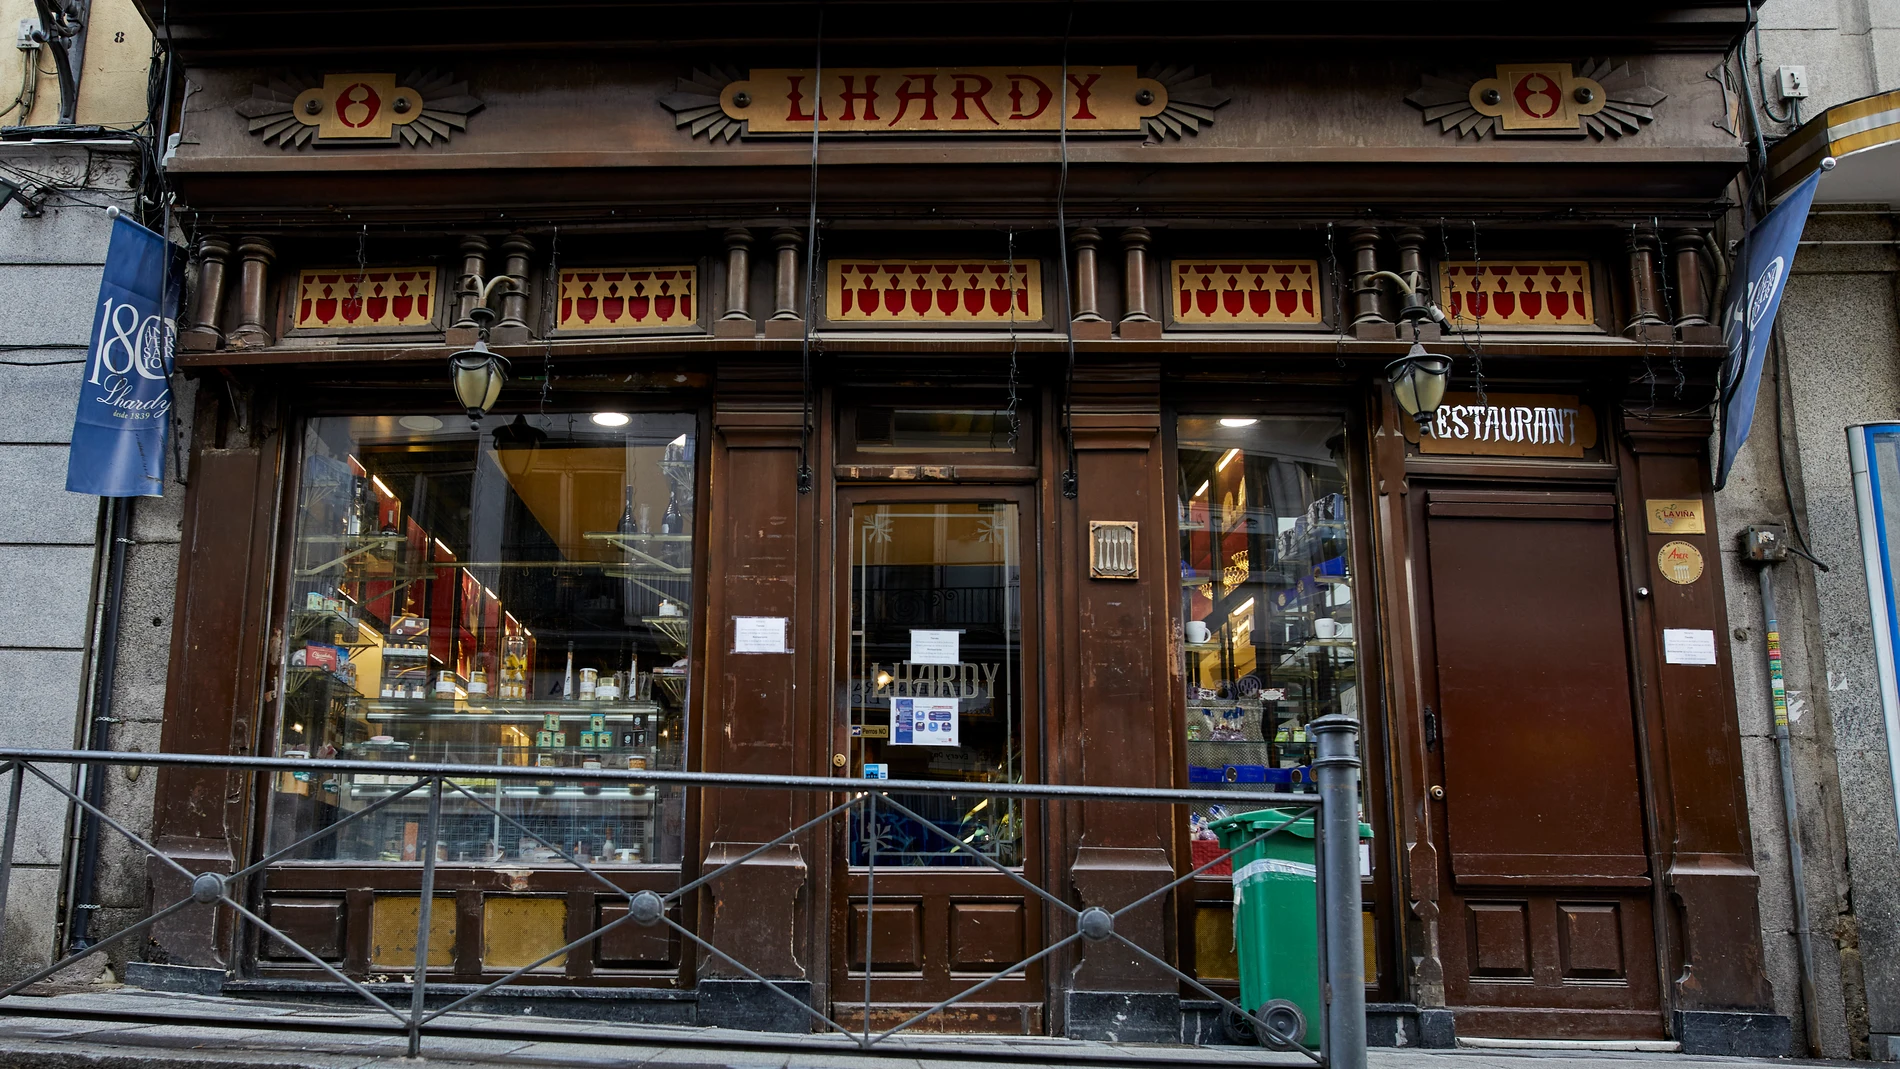 El histórico restaurante Lhardy, en Madrid